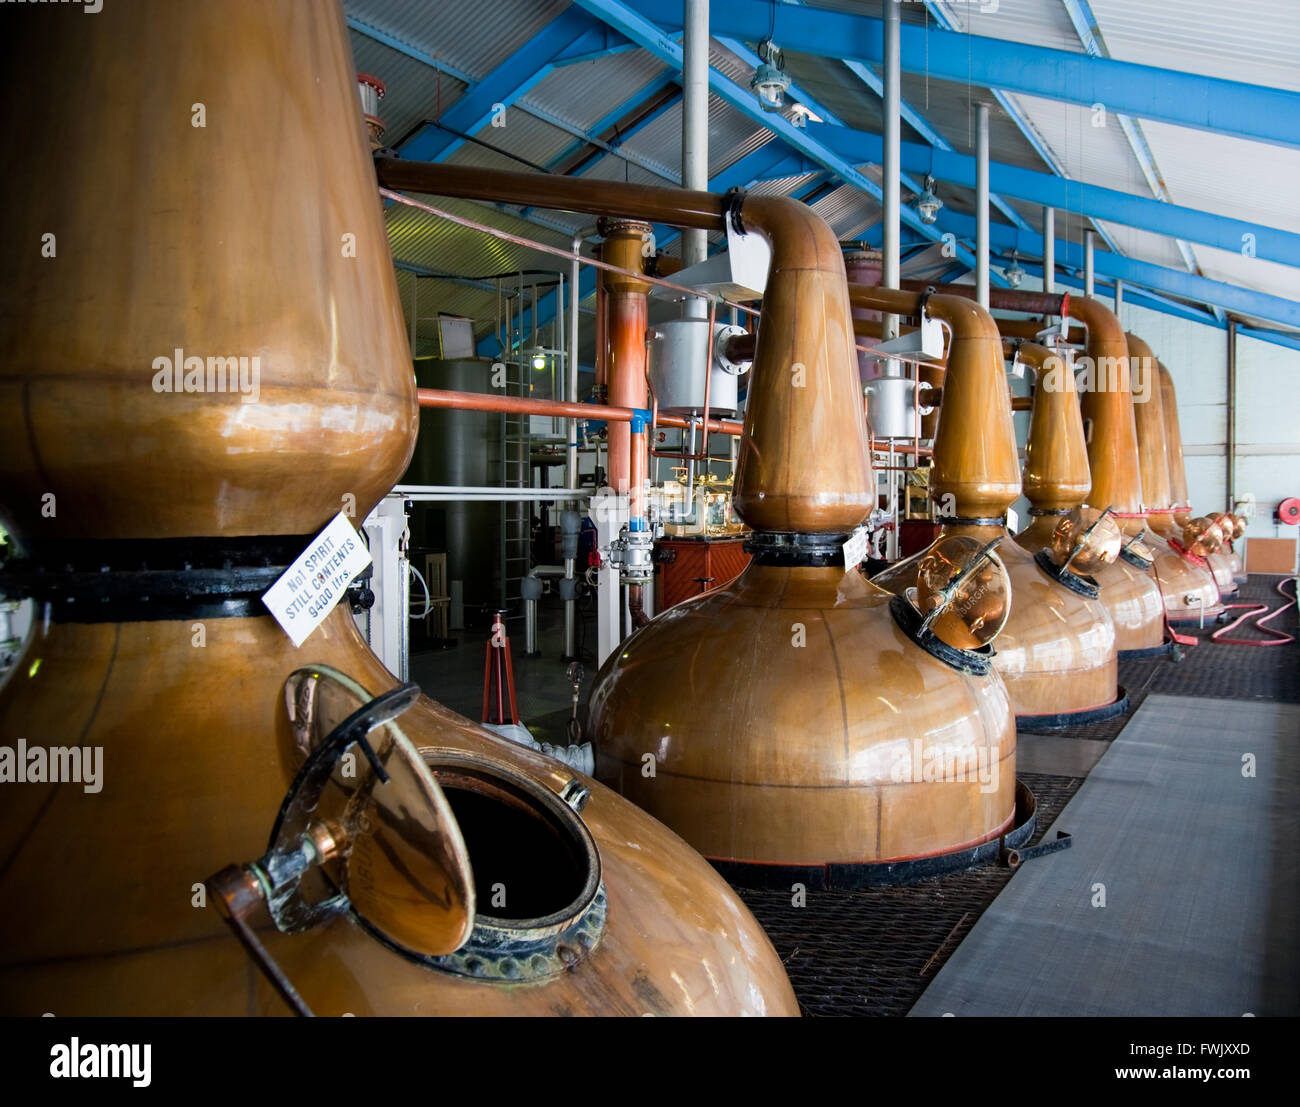 La distillerie de whisky d'Islay stills Banque D'Images